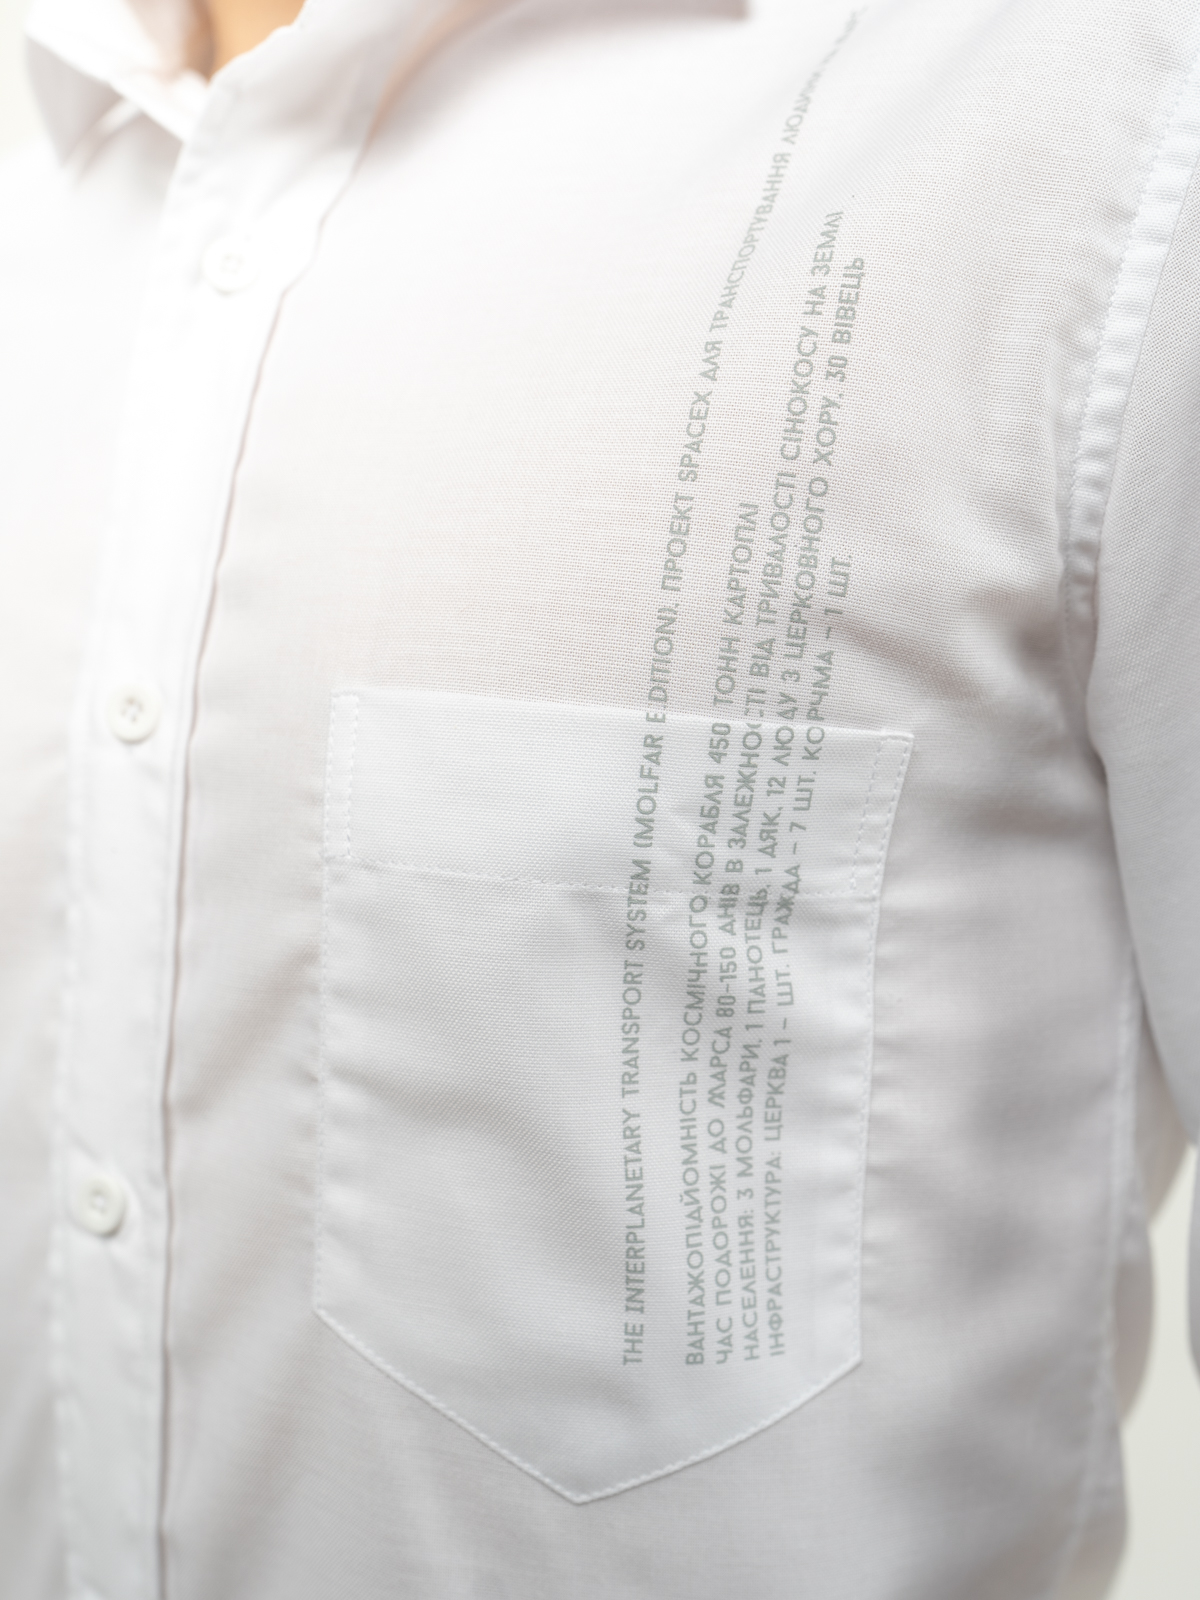 Men's Shirt Molfar-X. Color white. 
Size worn by the model: М.